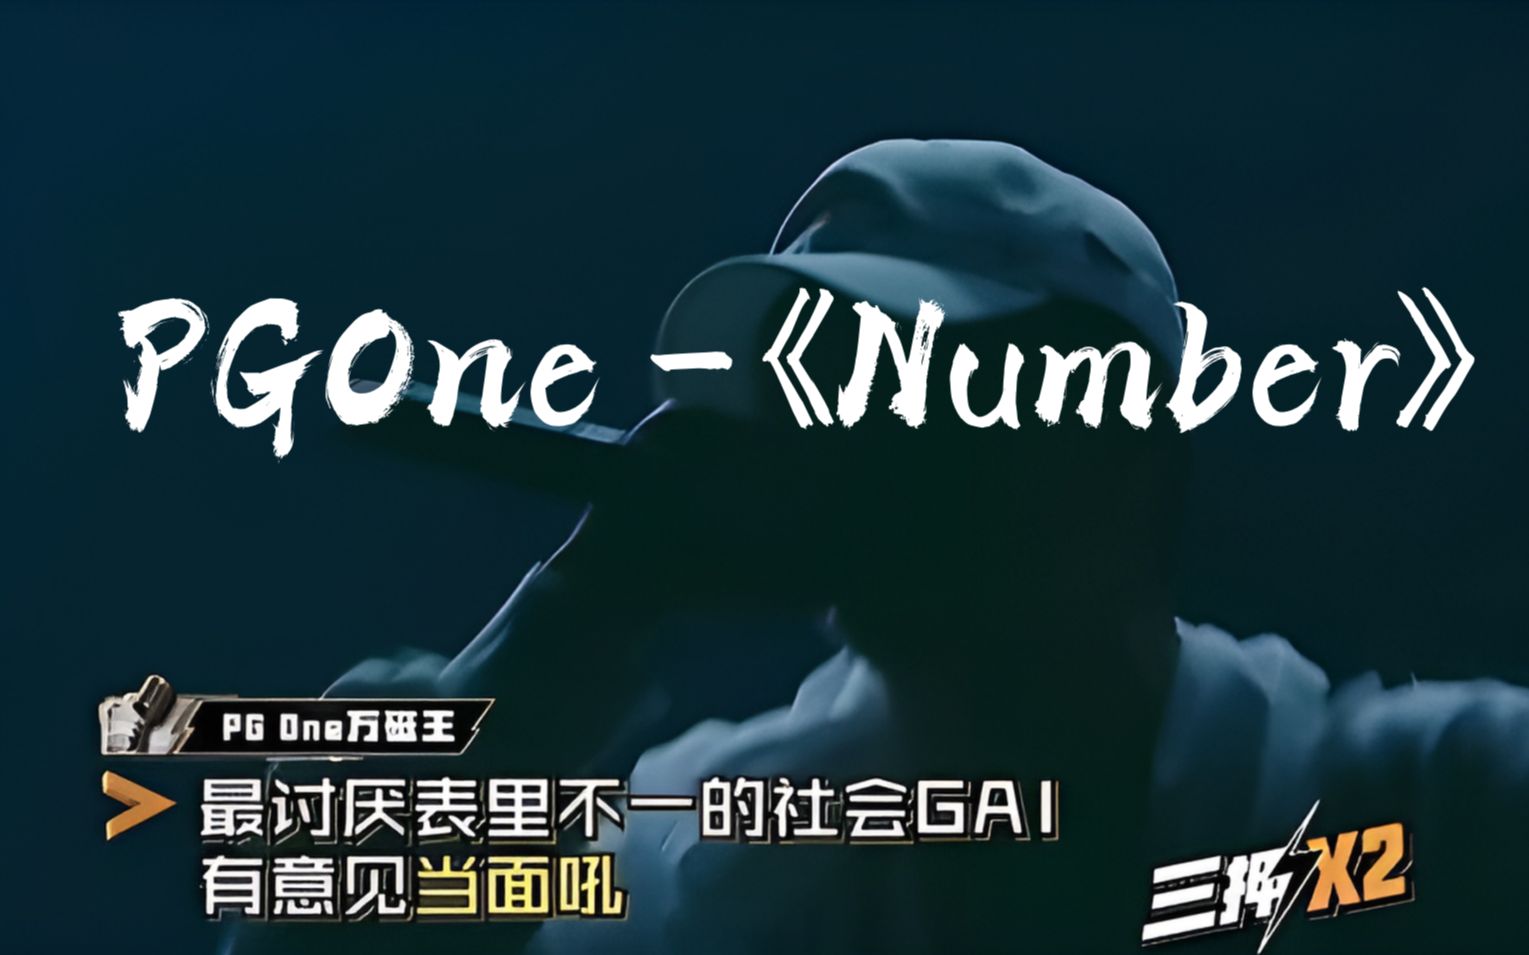 PGone -《Number》“不要忘了 我也是冠军”